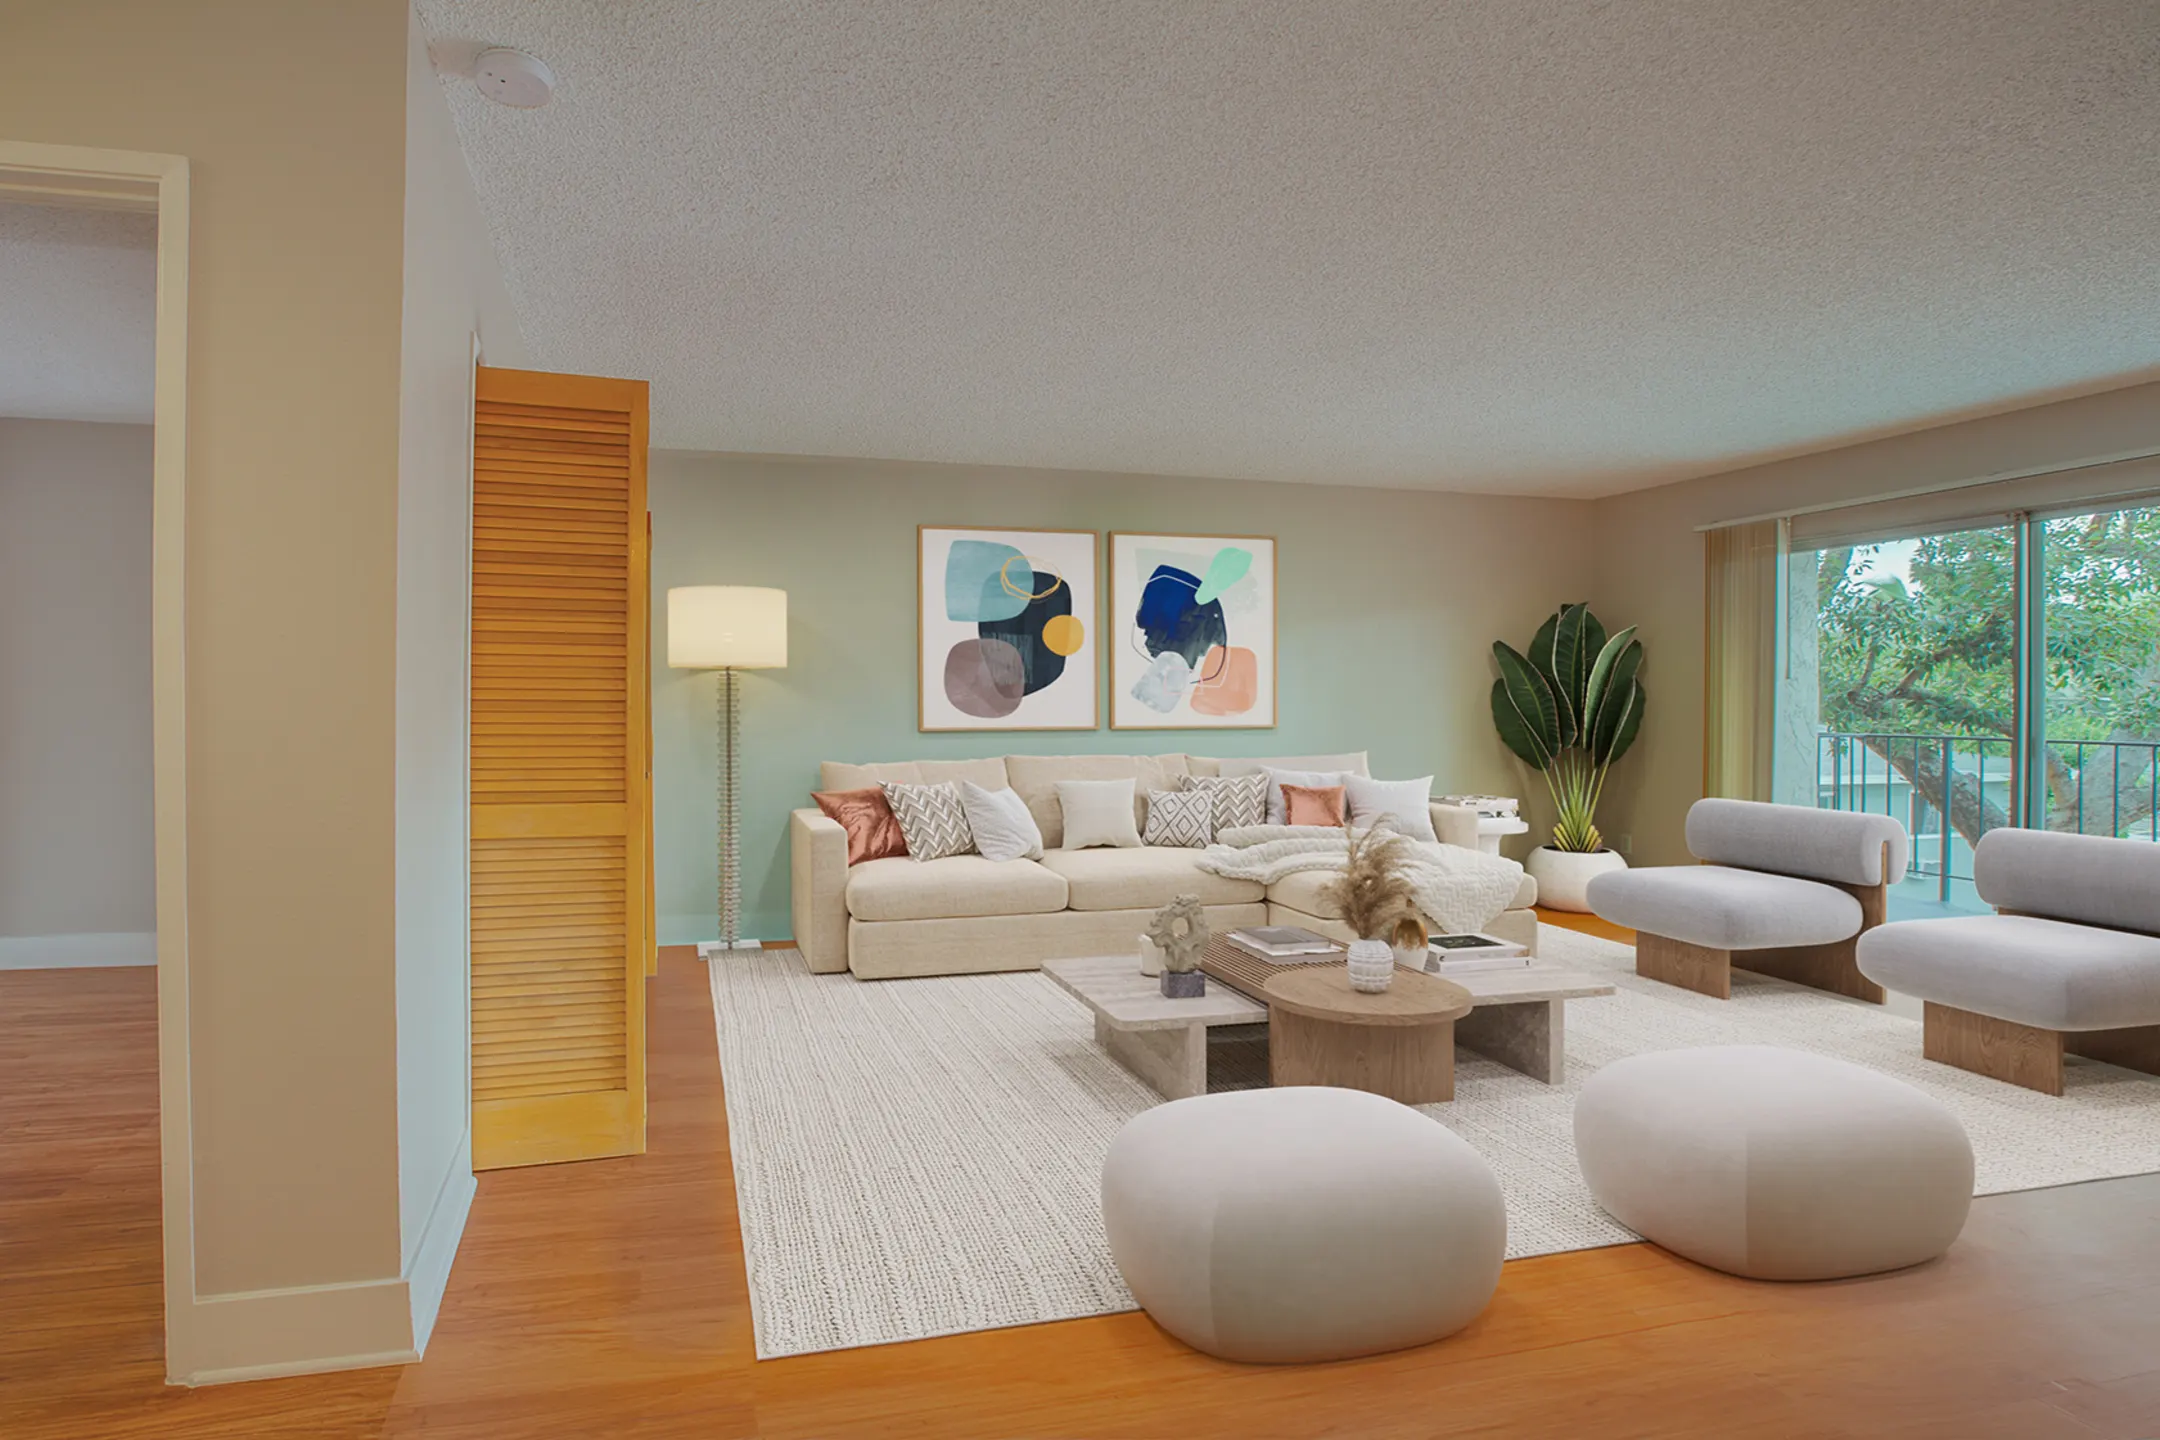 Living Room - Villas of Pasadena Apartment Homes - Pasadena, CA